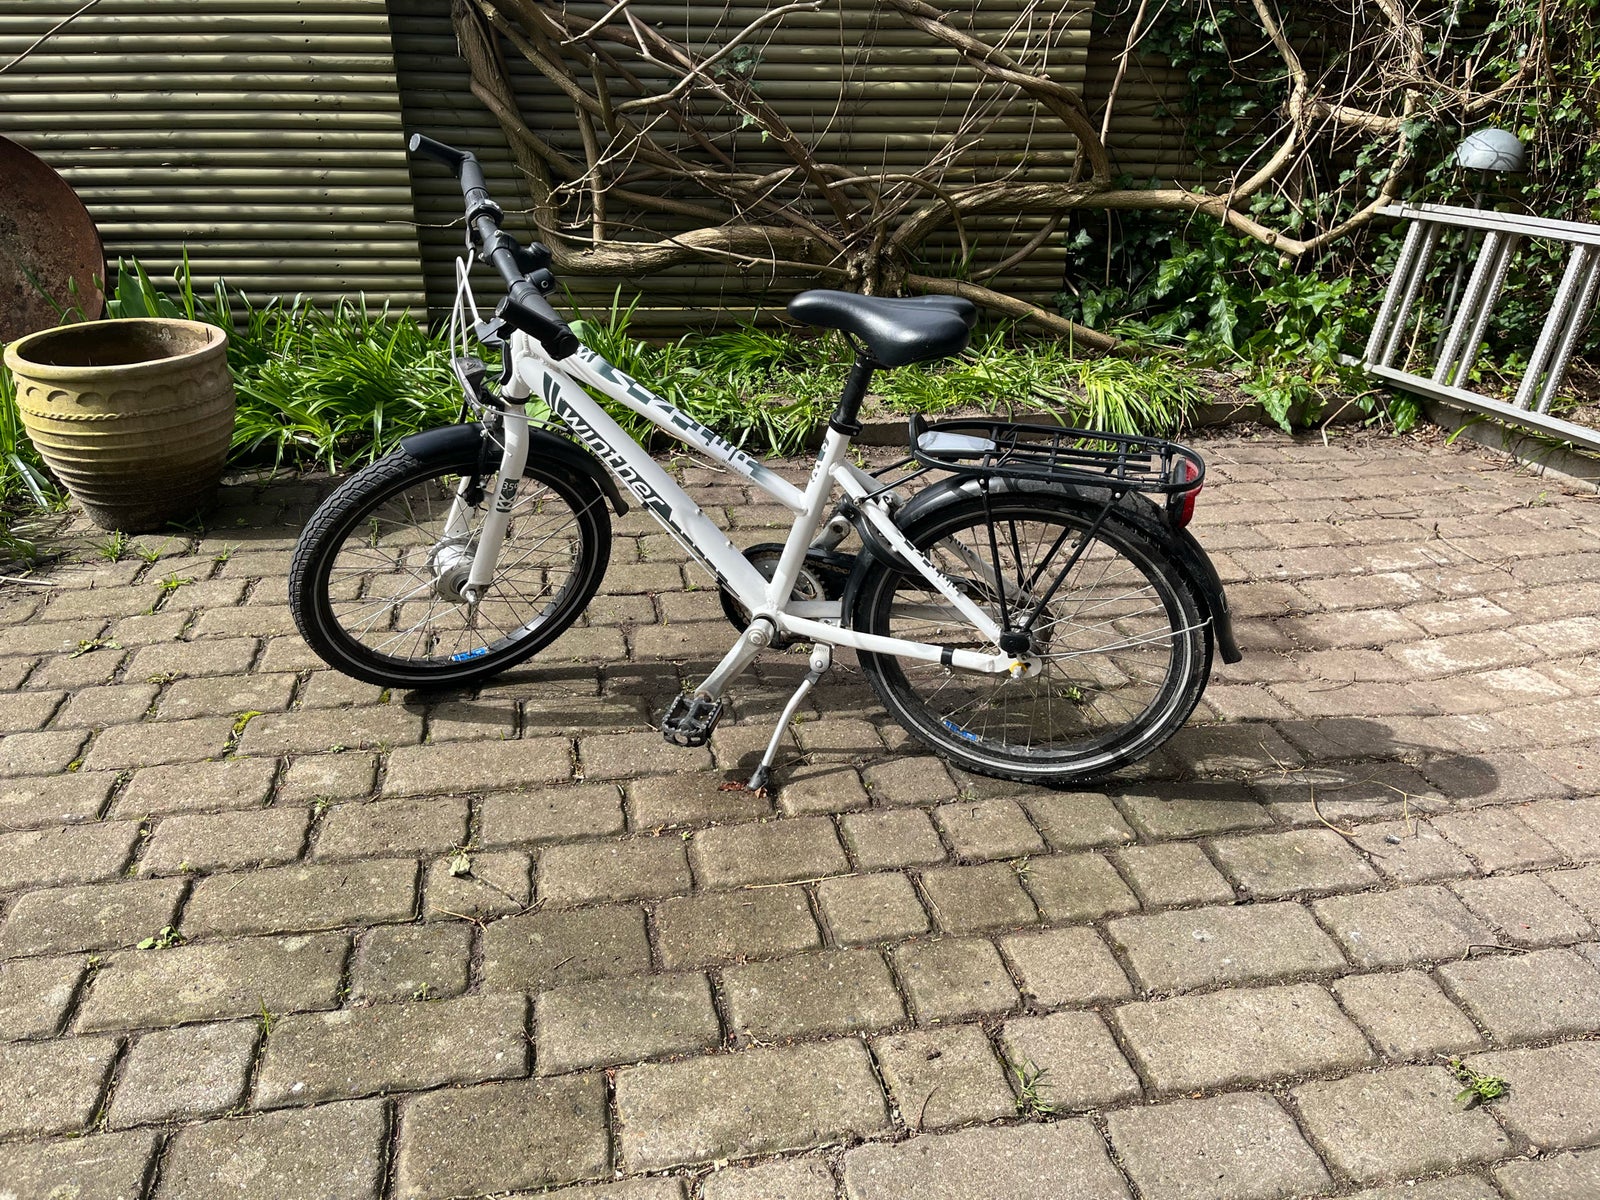 Unisex børnecykel, classic cykel, Winther